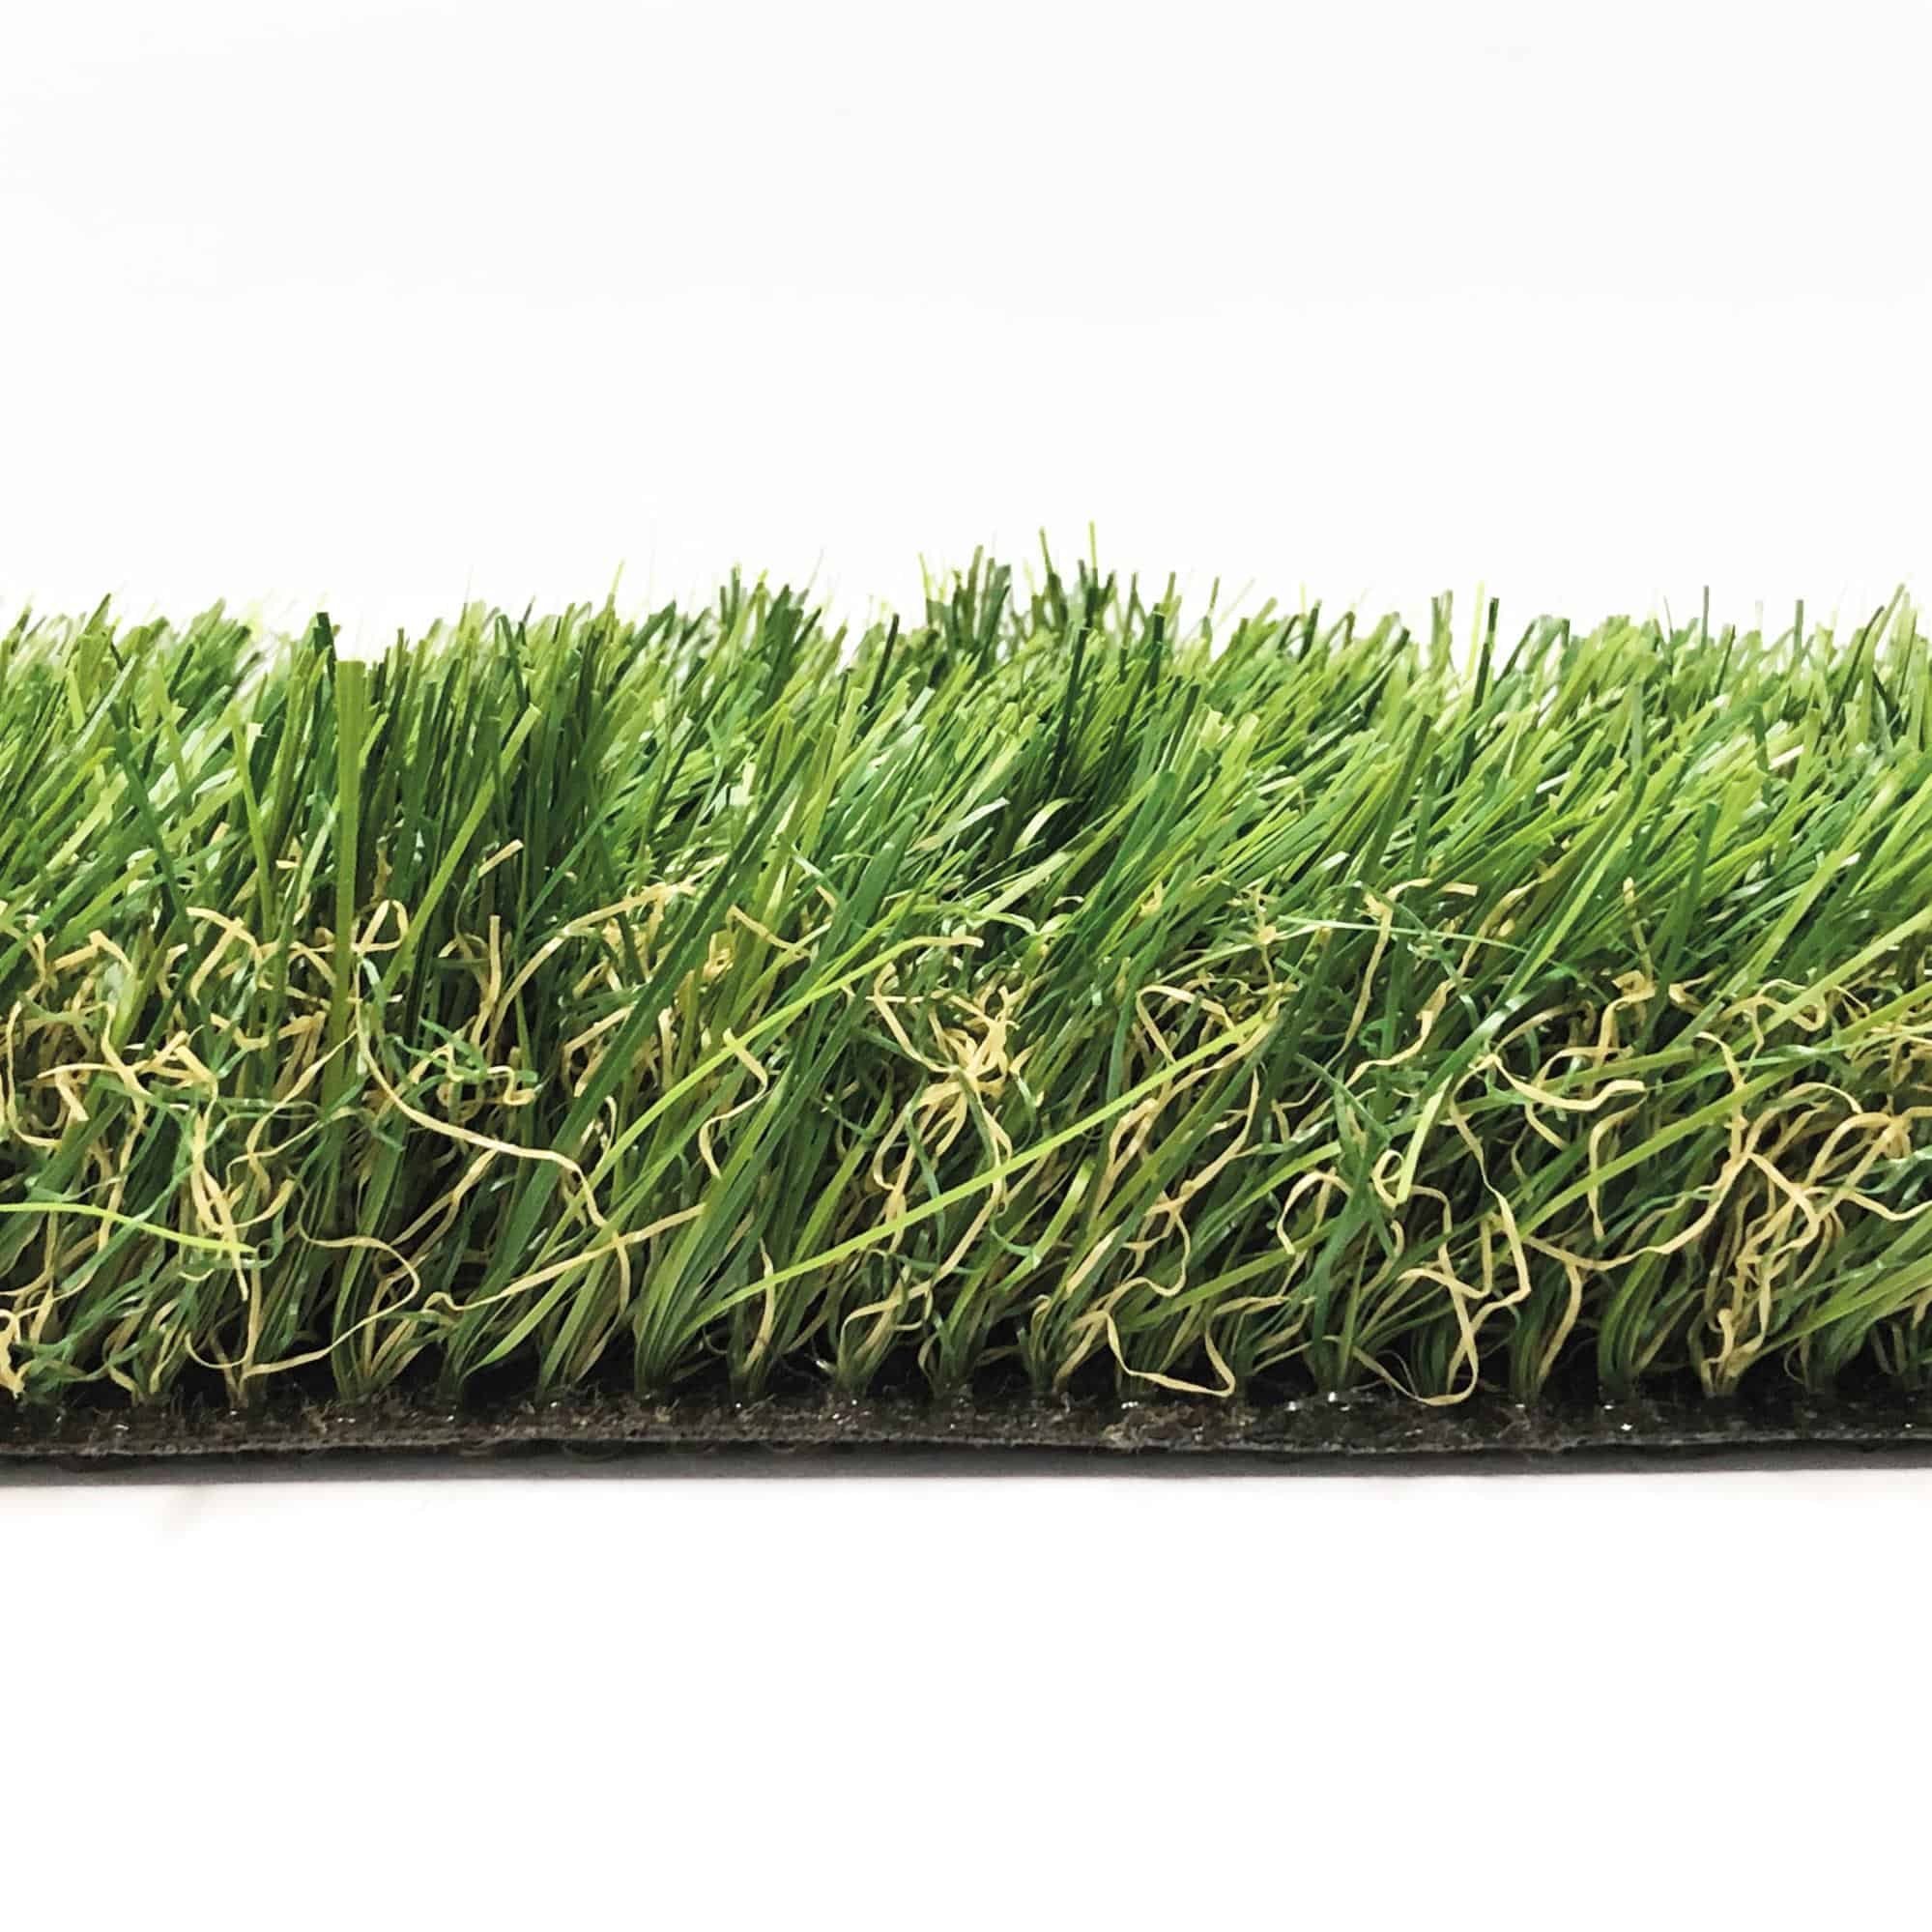 CORE Lawn Natural Artificial Grass 4m Wide Roll 21 m